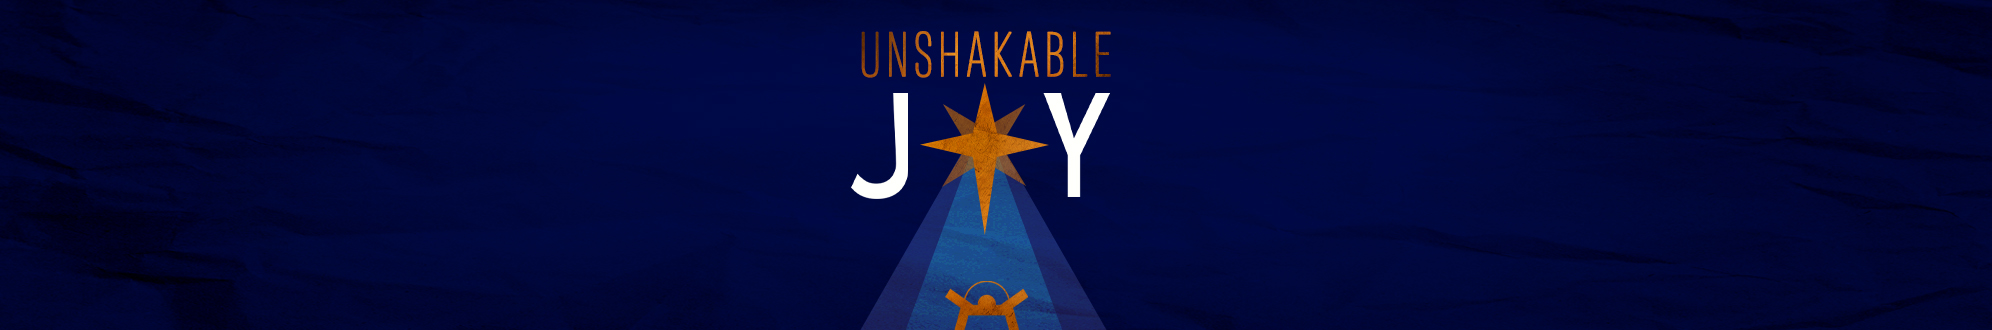 Unshakeable Joy